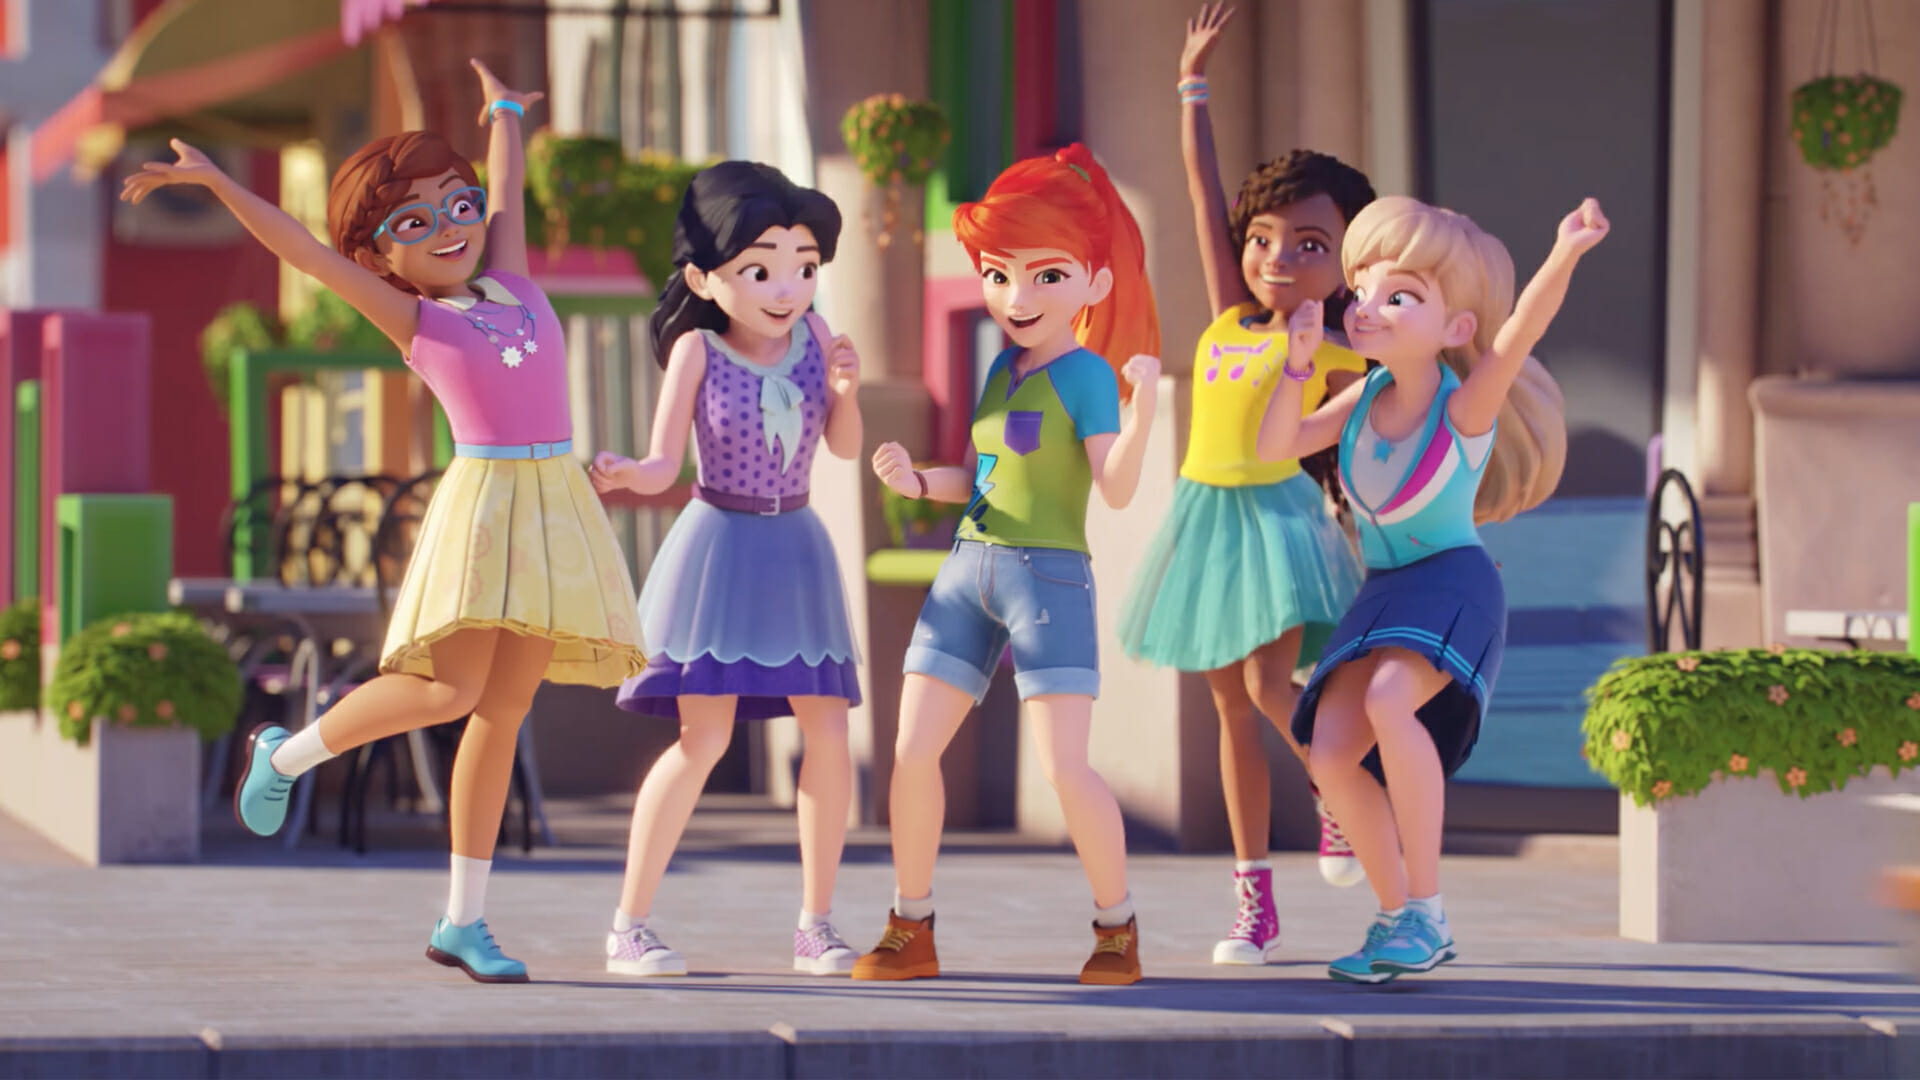 Thumbnail from LEGO FRIENDS Tv-serie: five happy girls walking on the sidewalk